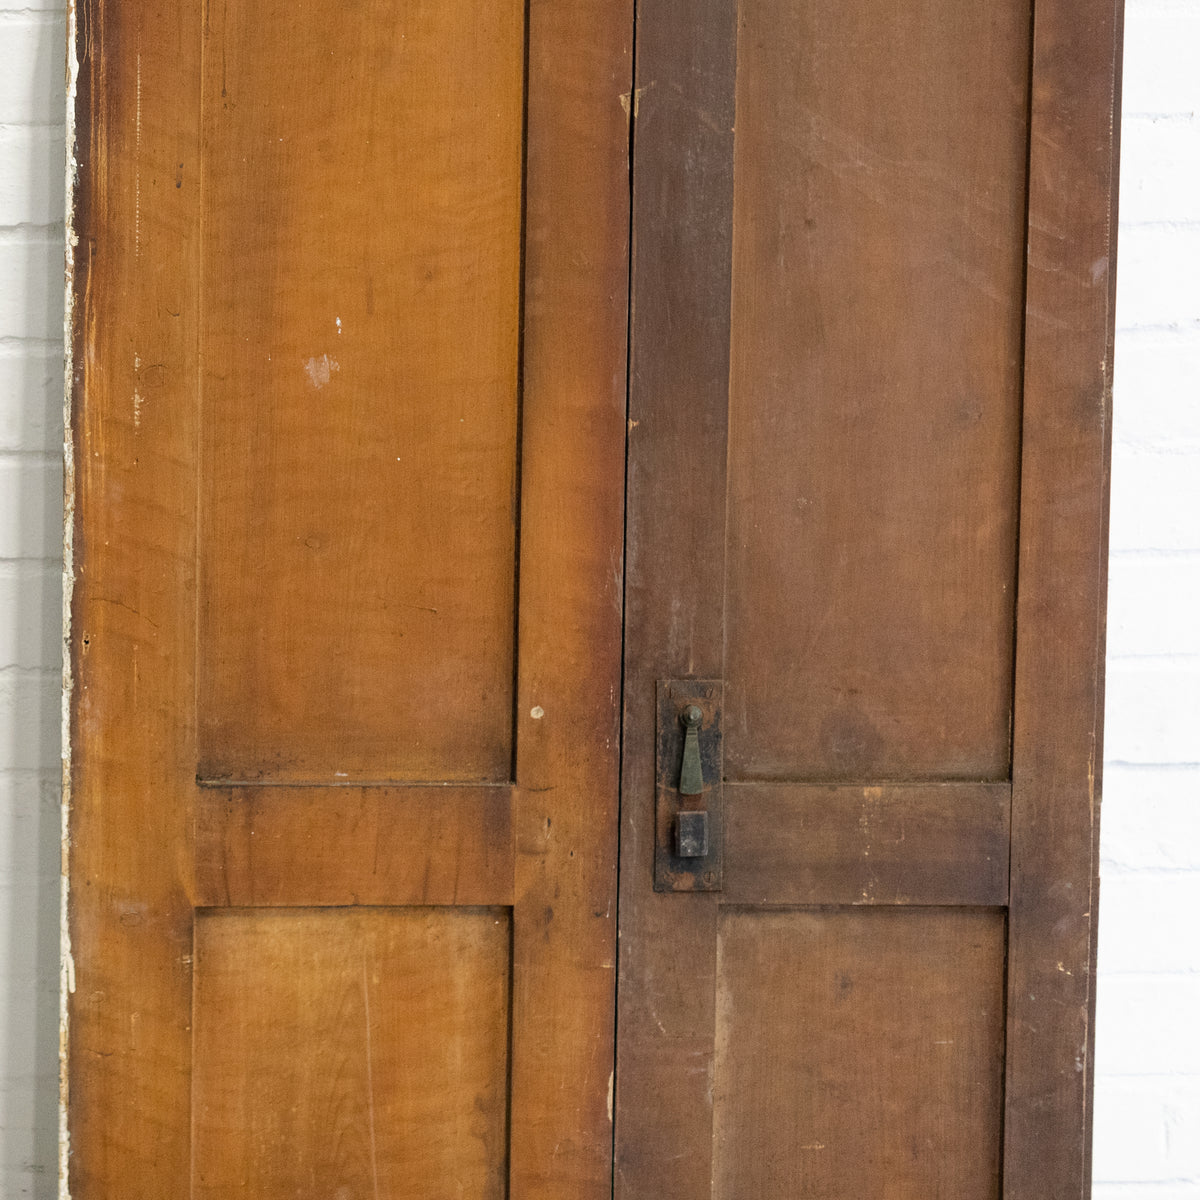 Antique Victorian window shutters | The Architectural Forum